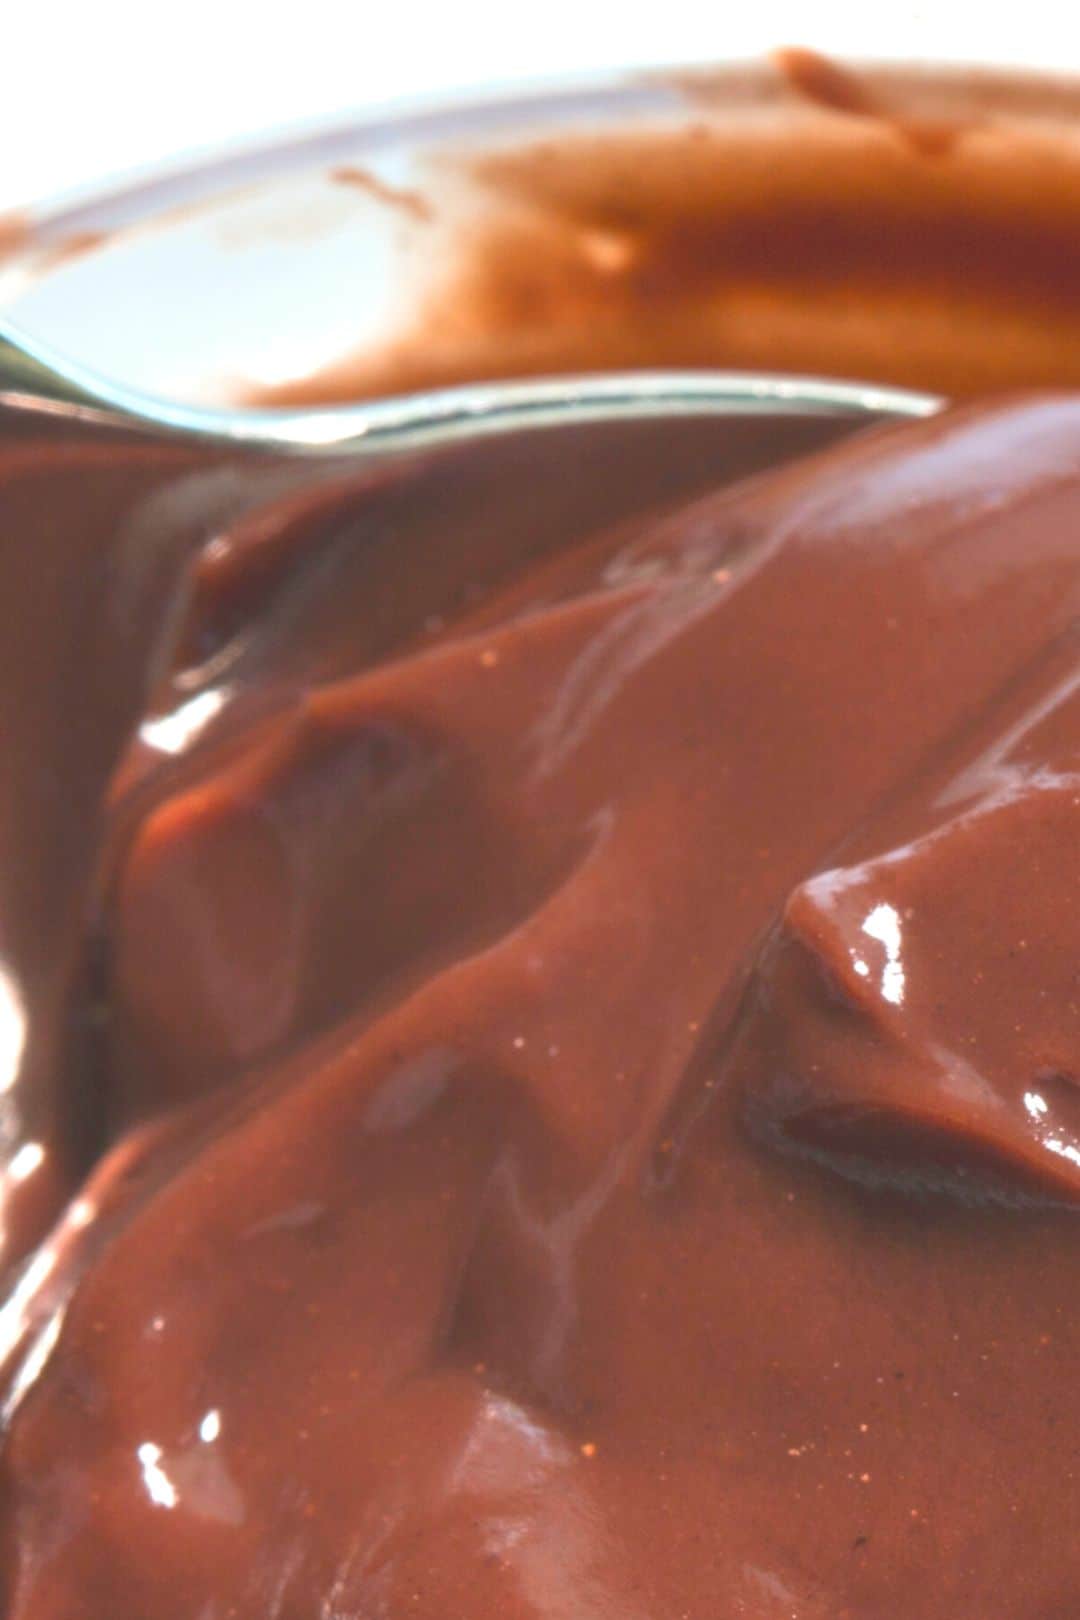 keto chocolate protein pudding 